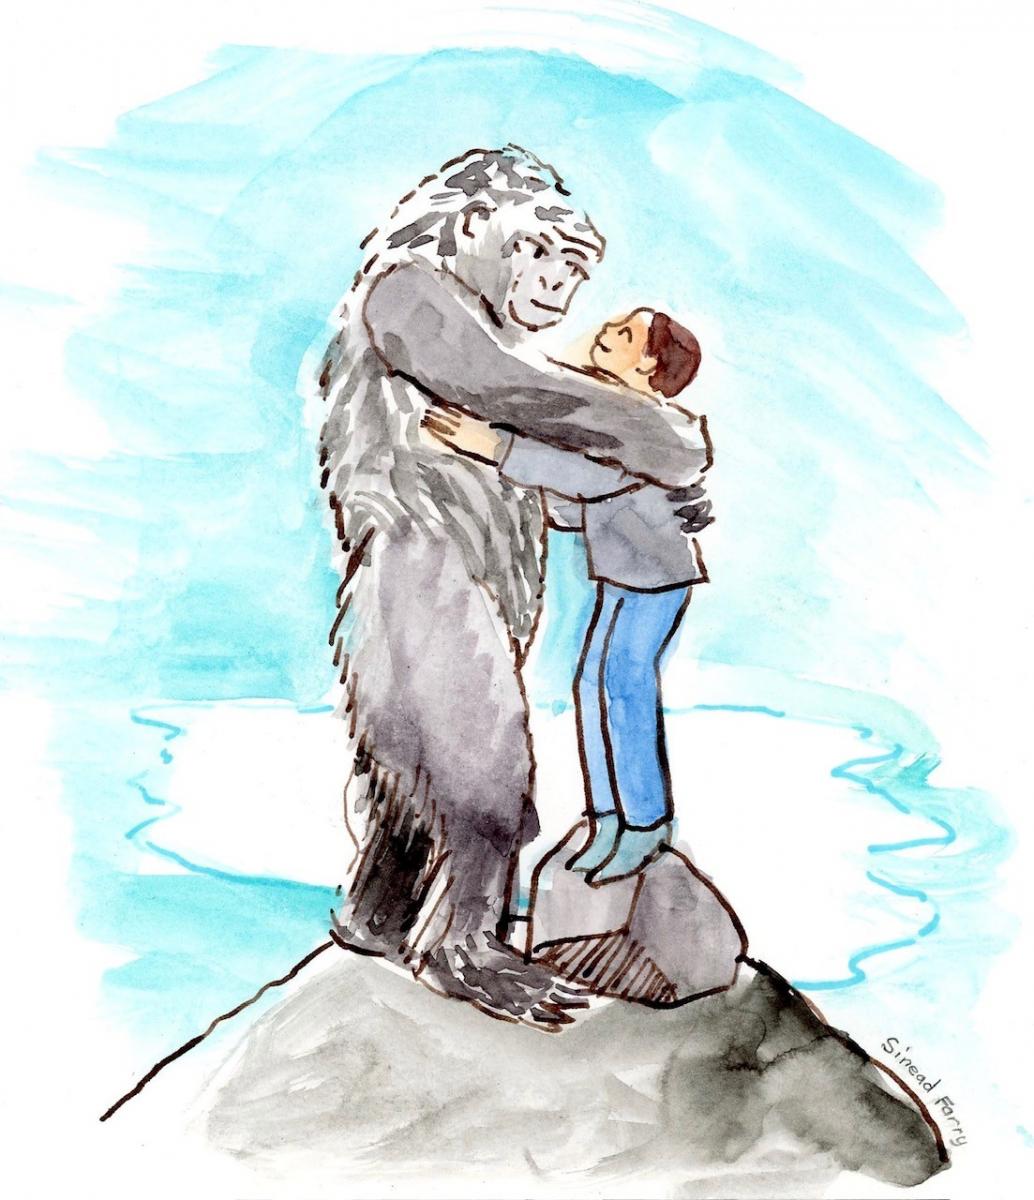 A gorilla standing on a mountain hugging a girl